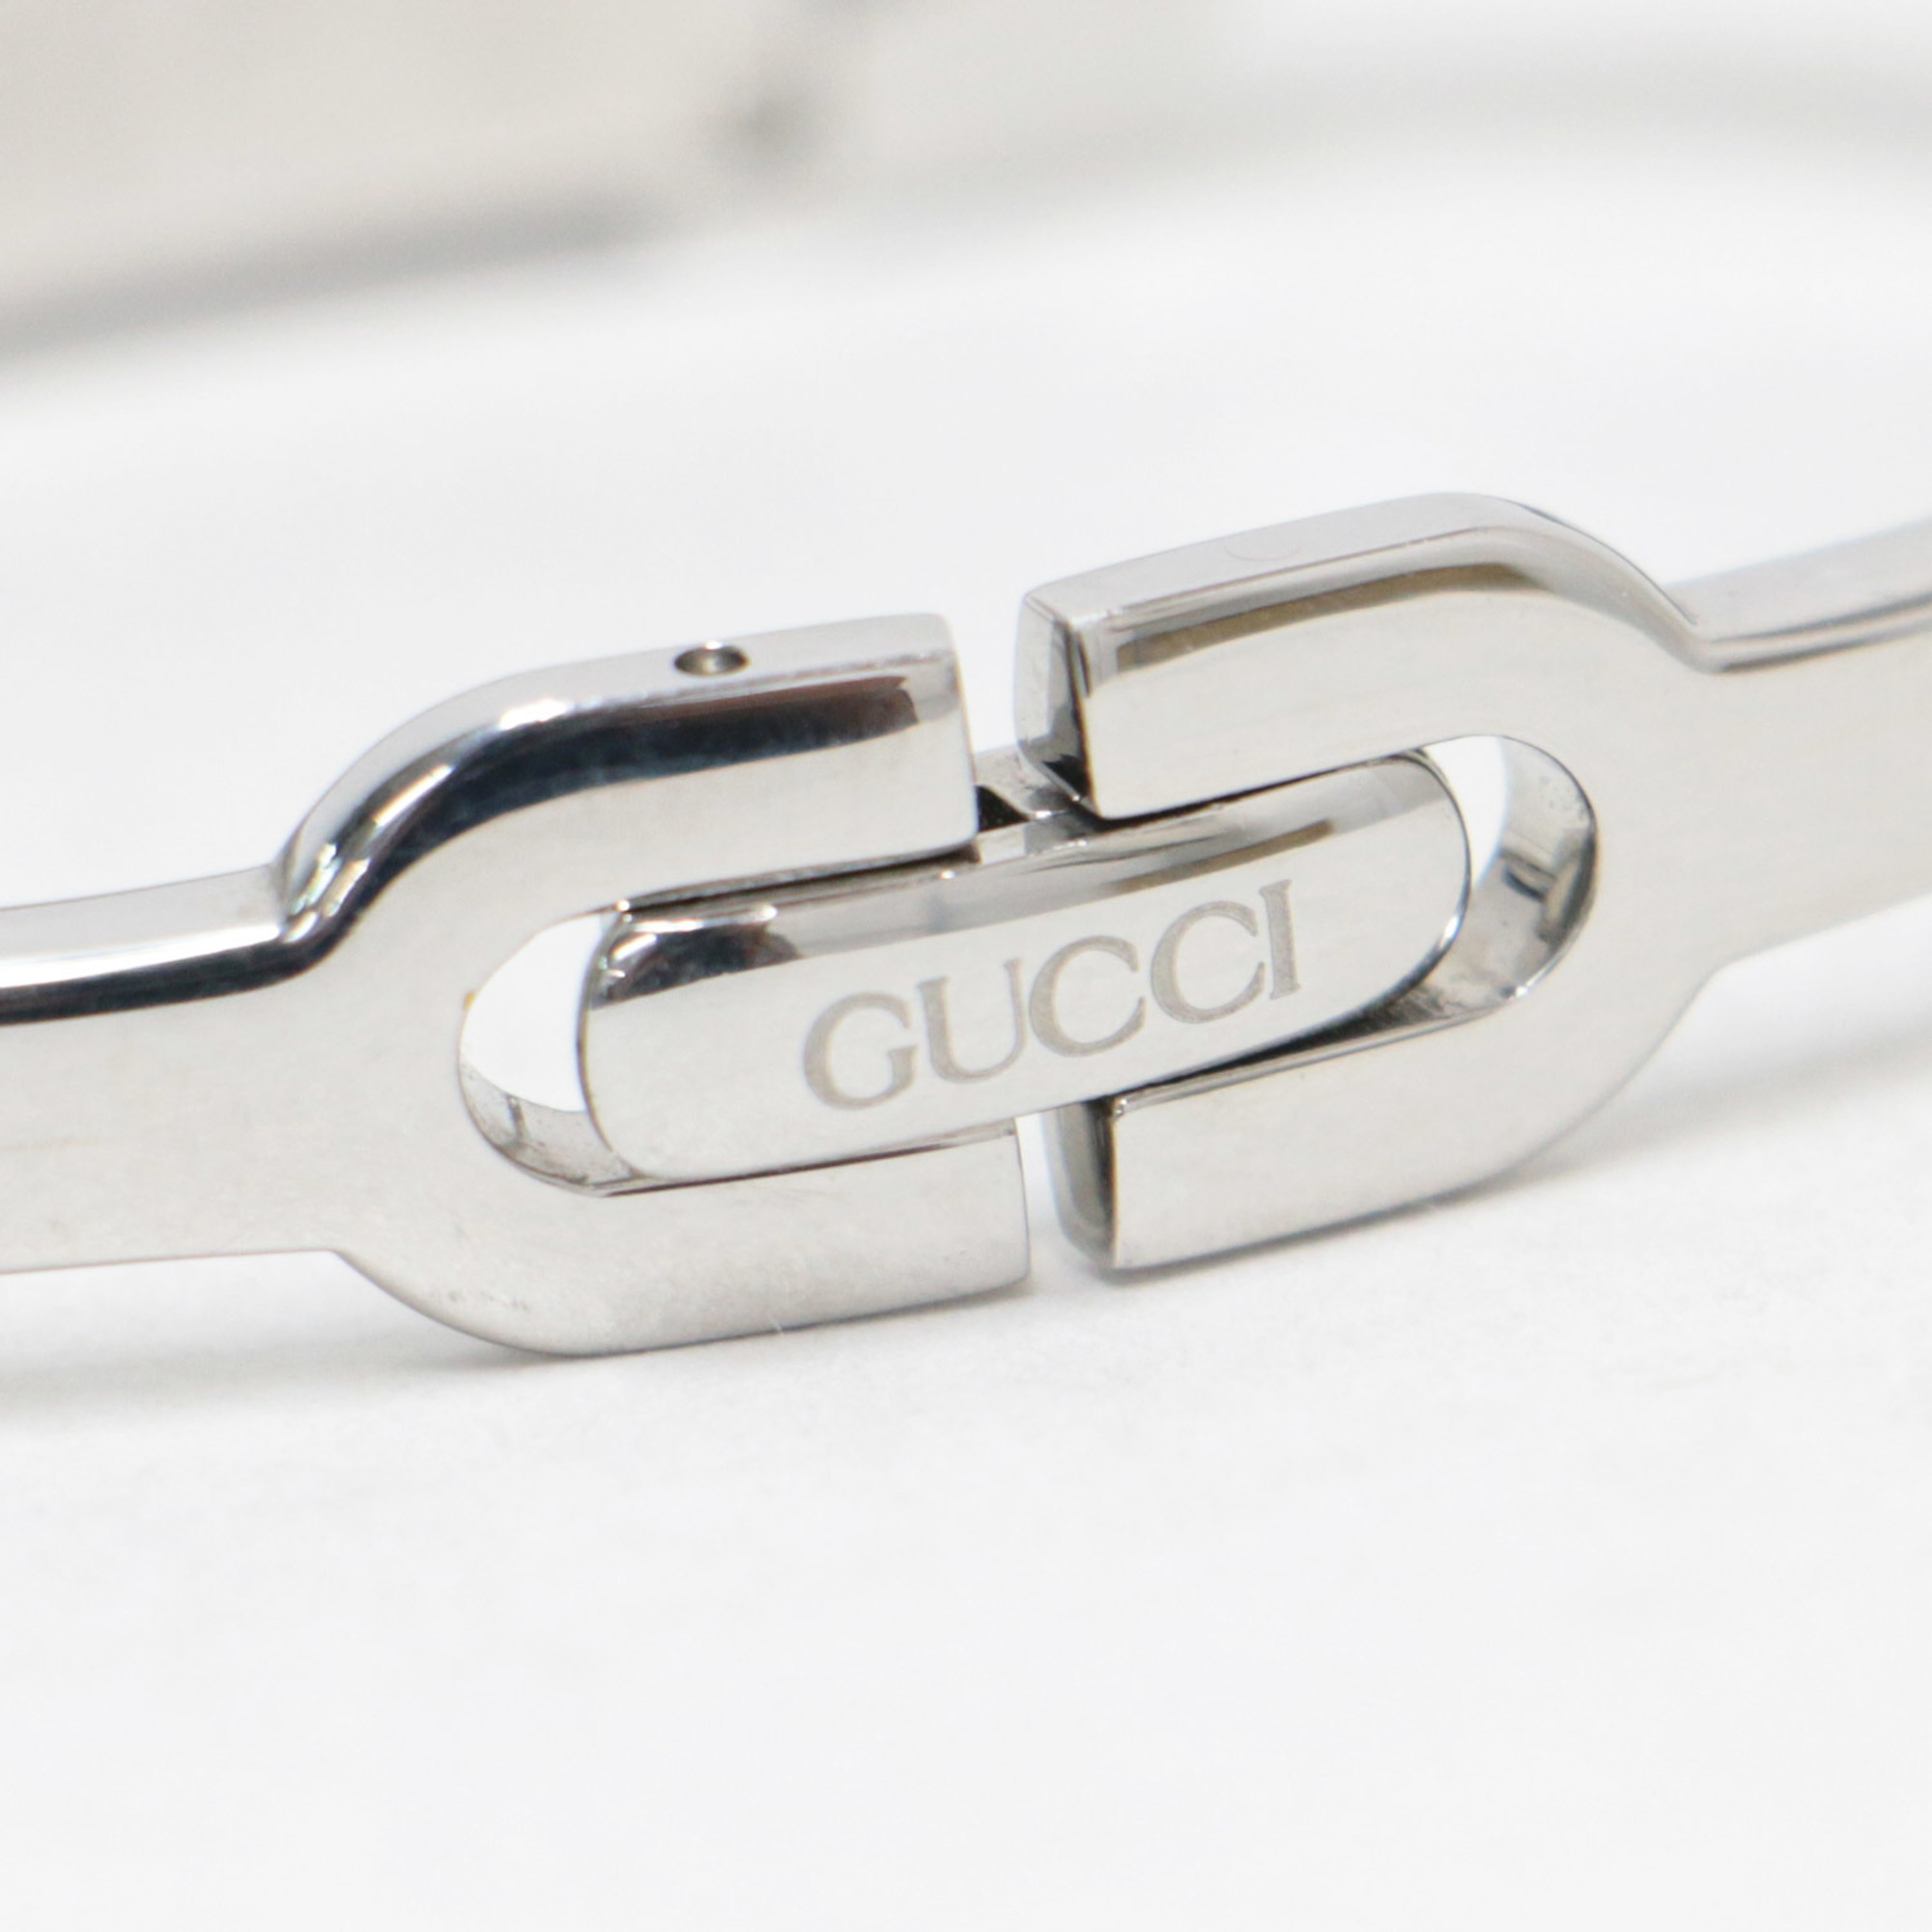 GUCCI Gucci Watch Bangle Silver Beige Quartz Analog Stainless Steel 6800L Mini